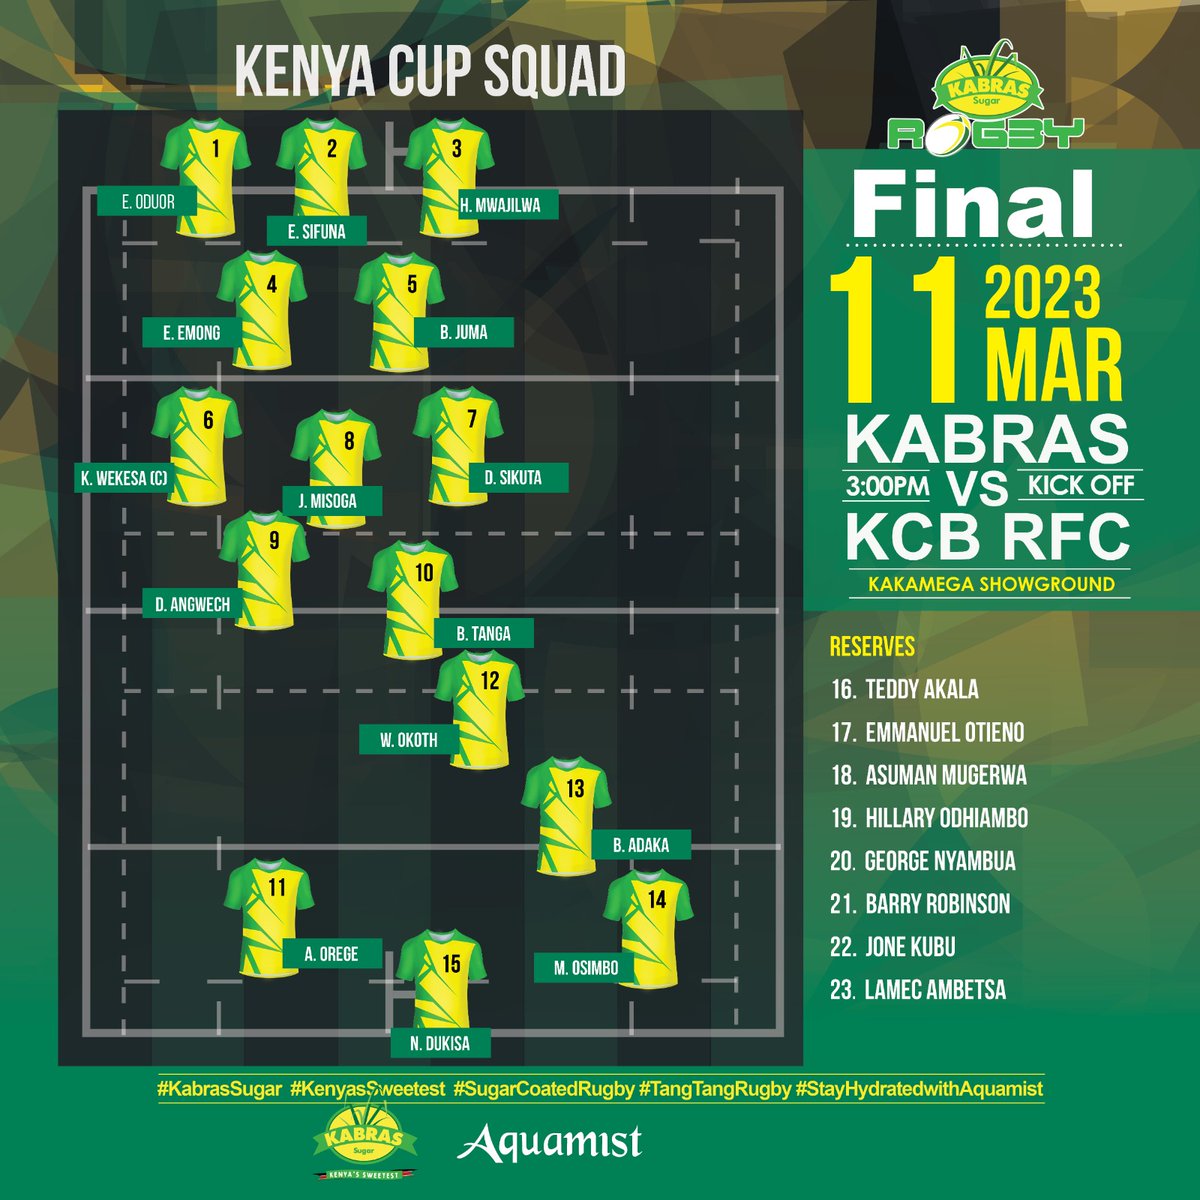 Ndio hio sasa!!!

The last #KenyaCupFinal squad selection for the season. The best for last, come on boys, hii kitu inabaki nyumbani, simbooooo!!!!💪🏿🔥

#KabrasSugar
#KenyasSweetest 
#TwendeKakamega